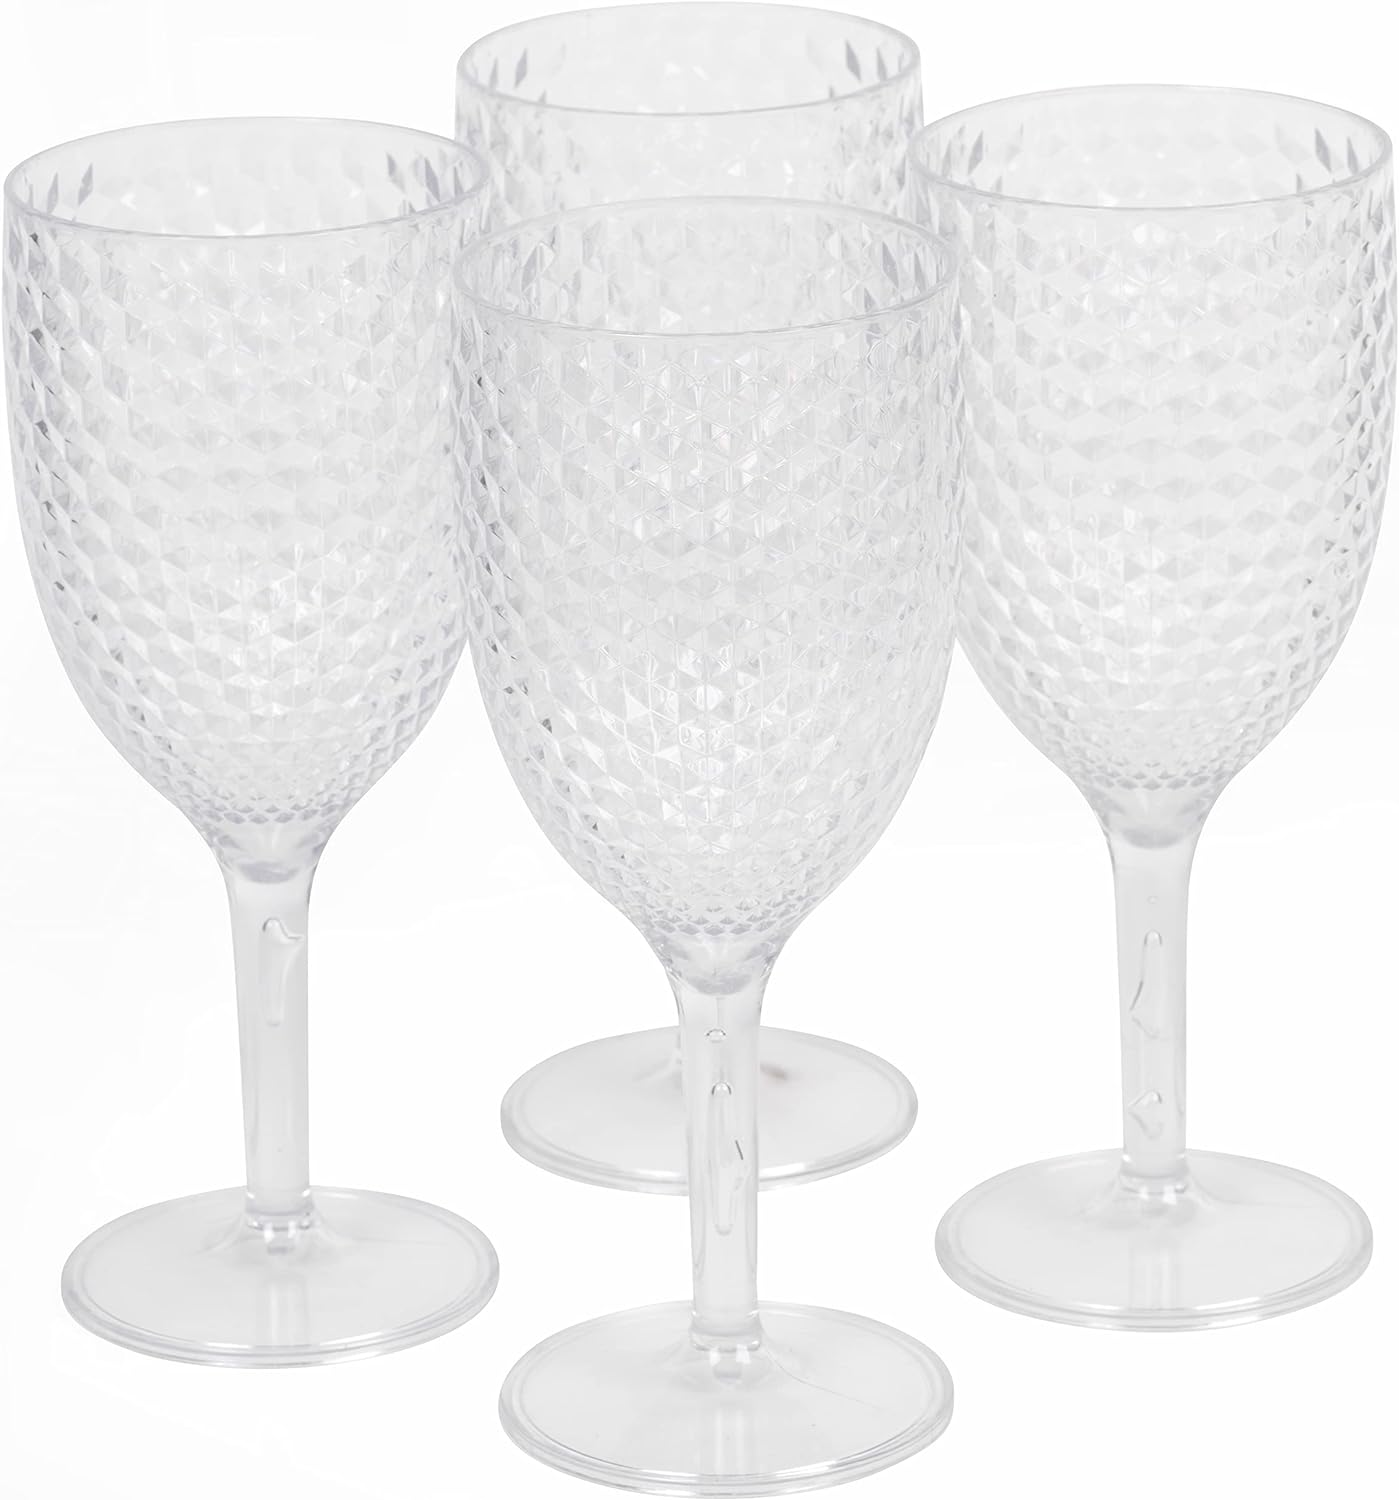 Cambridge CM07655EU7 Fete Diamond 4pcs wine glass set clear